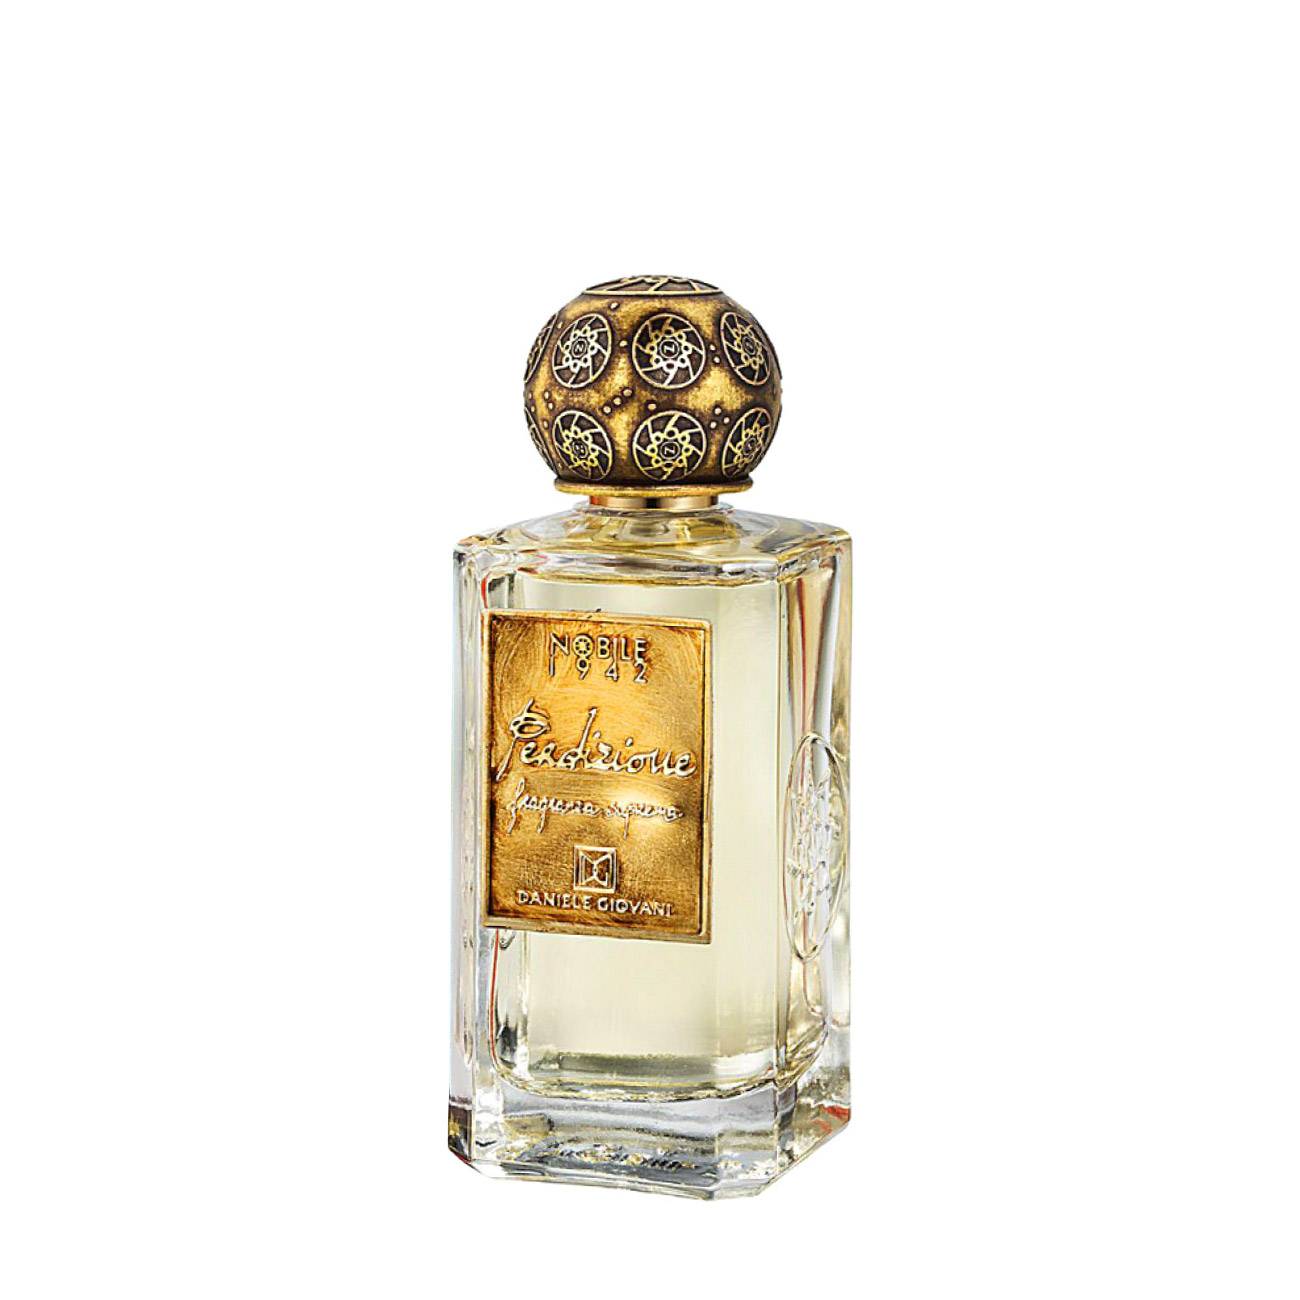 Parfum de niche Nobile 1942 PERDIZIONE 75ml cu comanda online